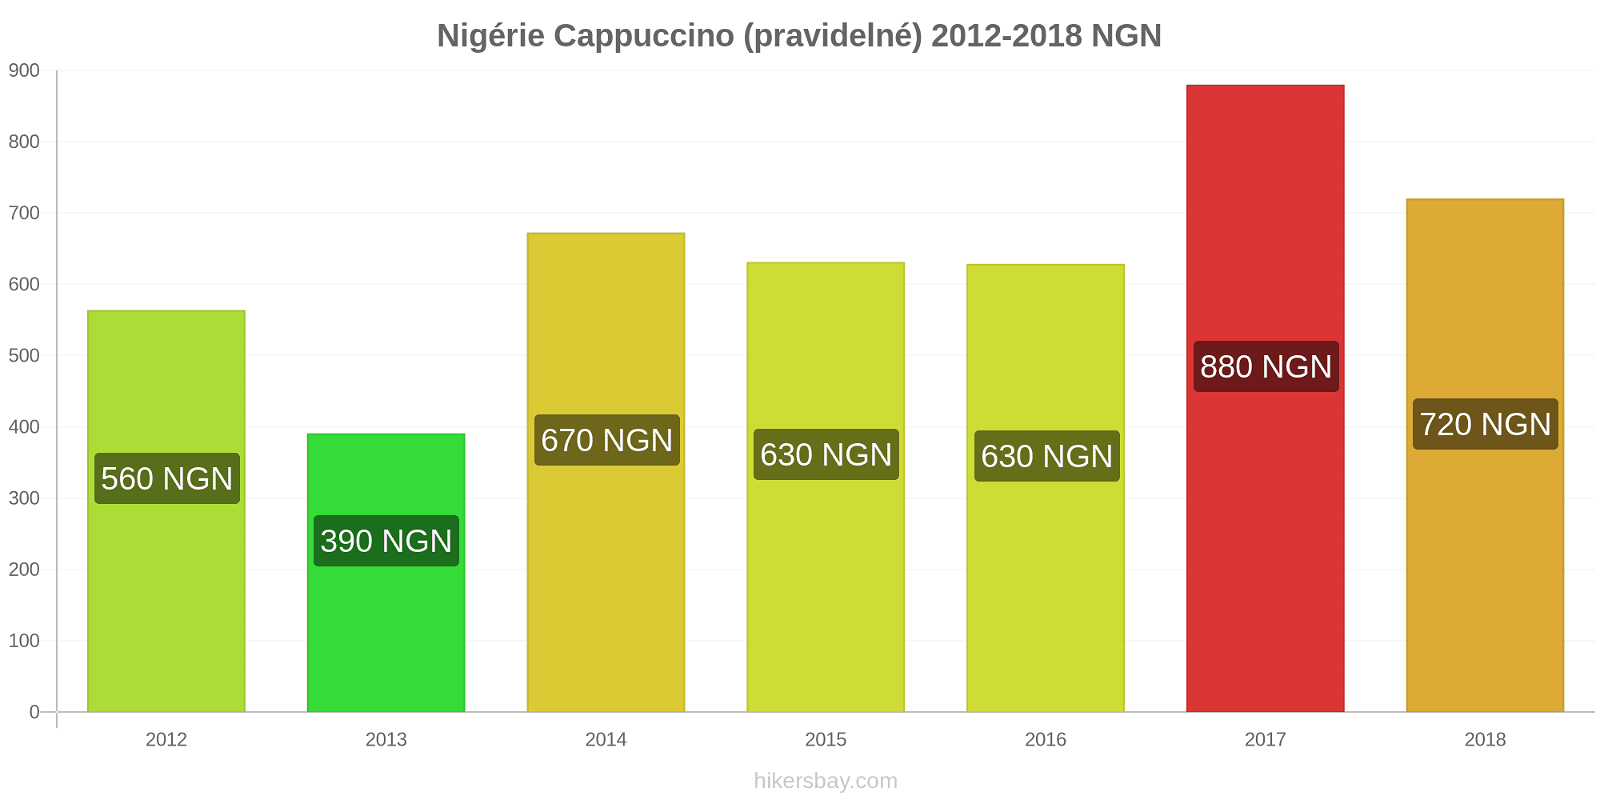 Nigérie změny cen Cappuccino hikersbay.com